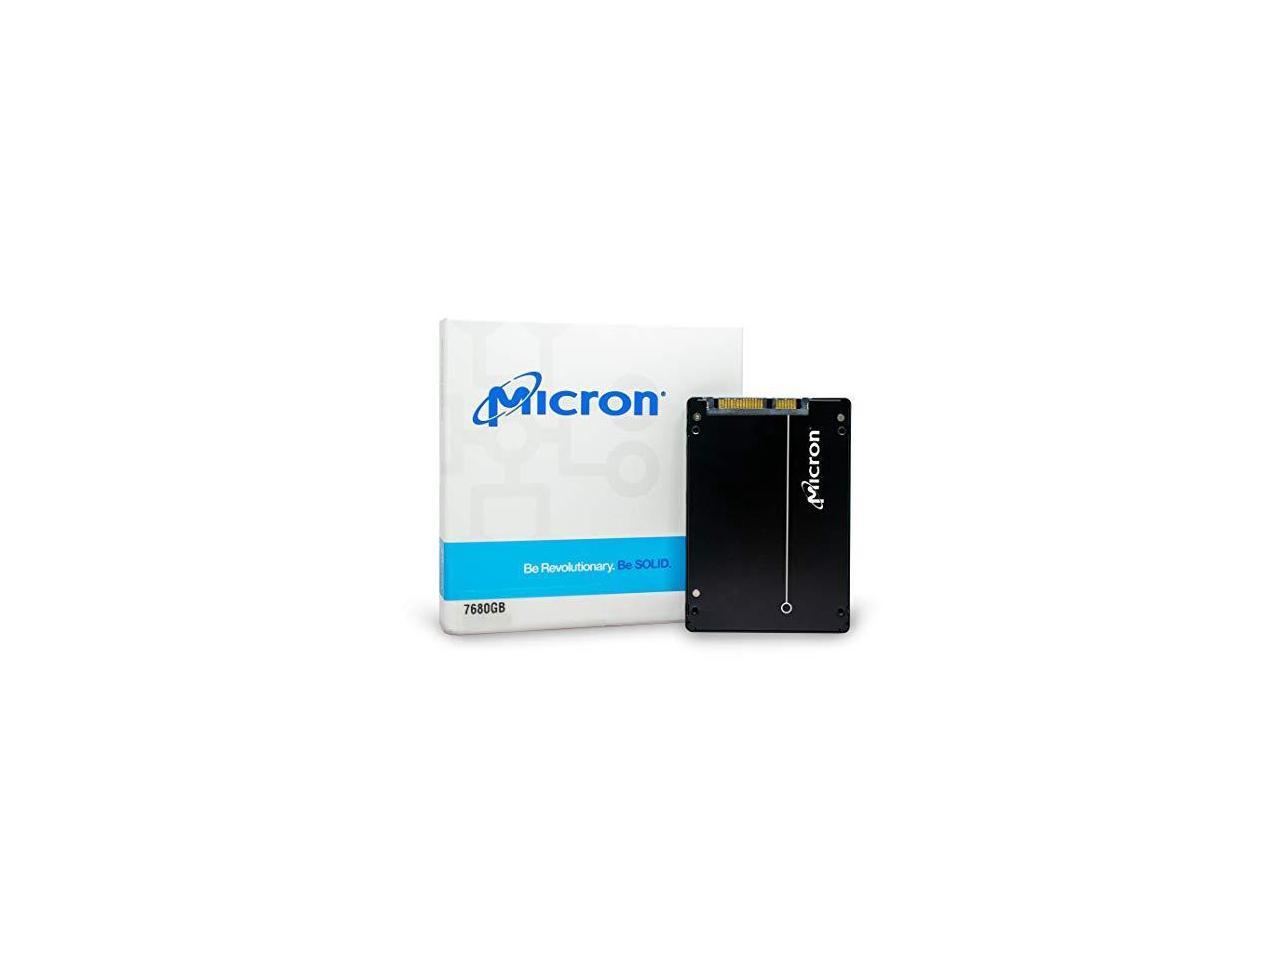 Micron 5210 Ion 7.68Tb Sata 6Gb/S 2.5" Enterprise Ssd — Mtfddak7T6Qde